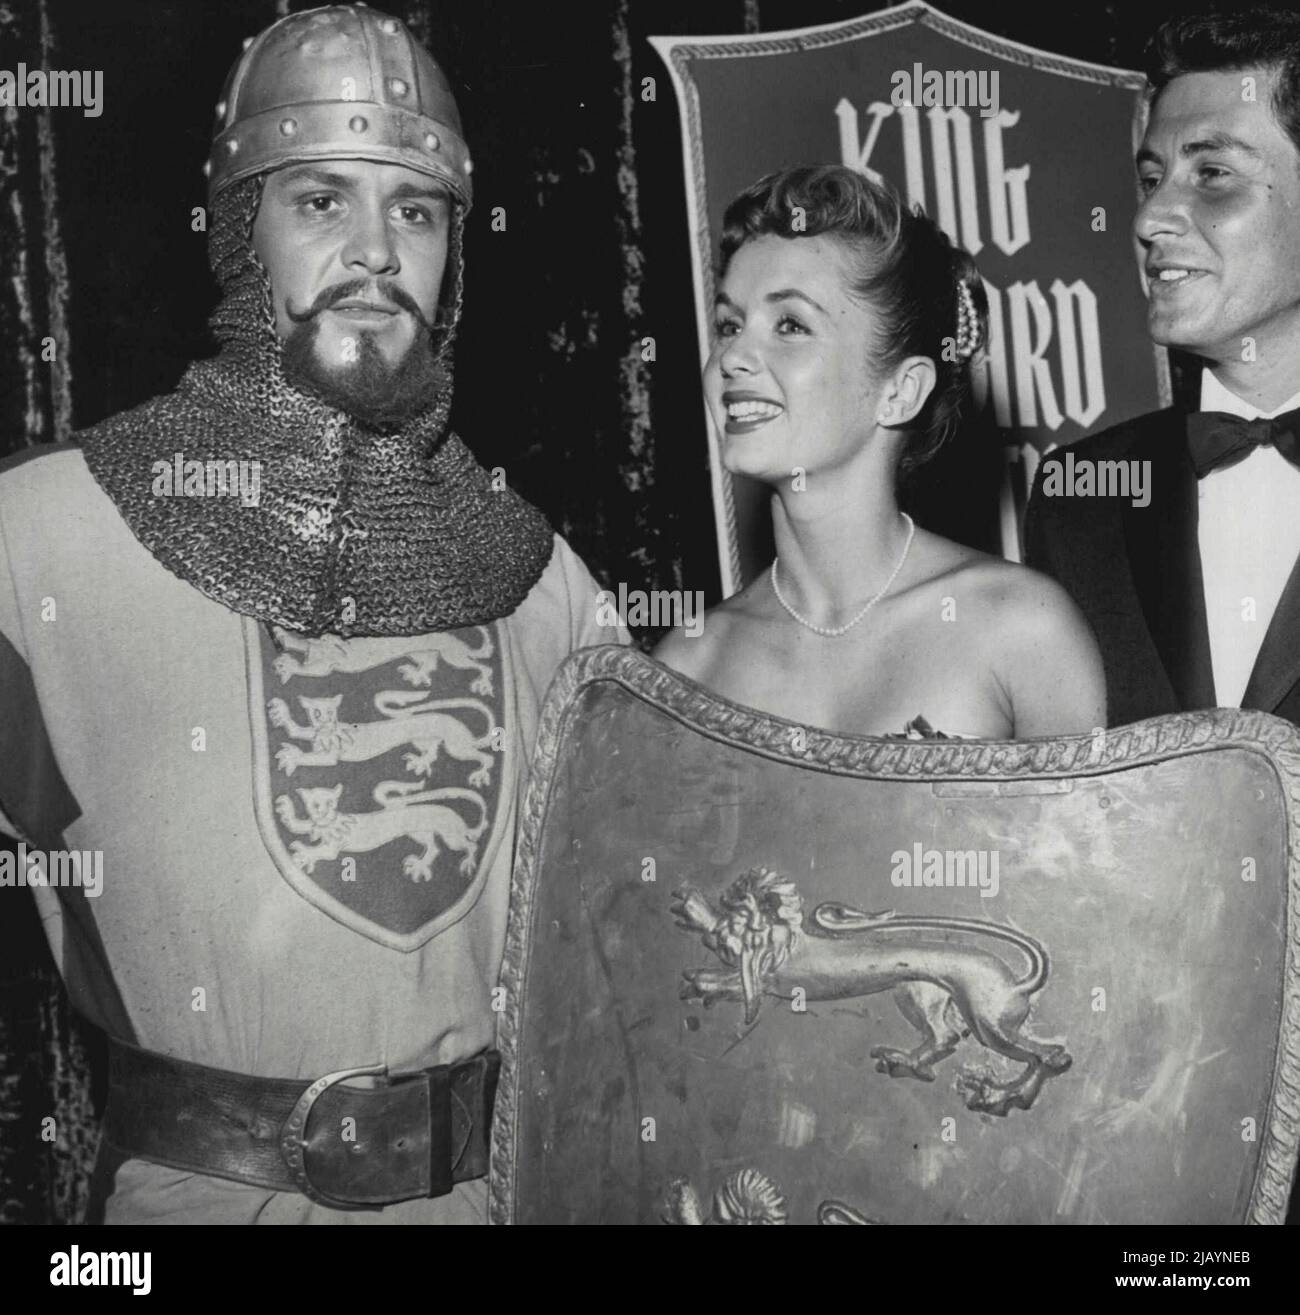 Roman Uniform - Eddie Fisher; Debbie Reynolds. June 10, 1955. (Photo by Jay Scott). Stock Photo